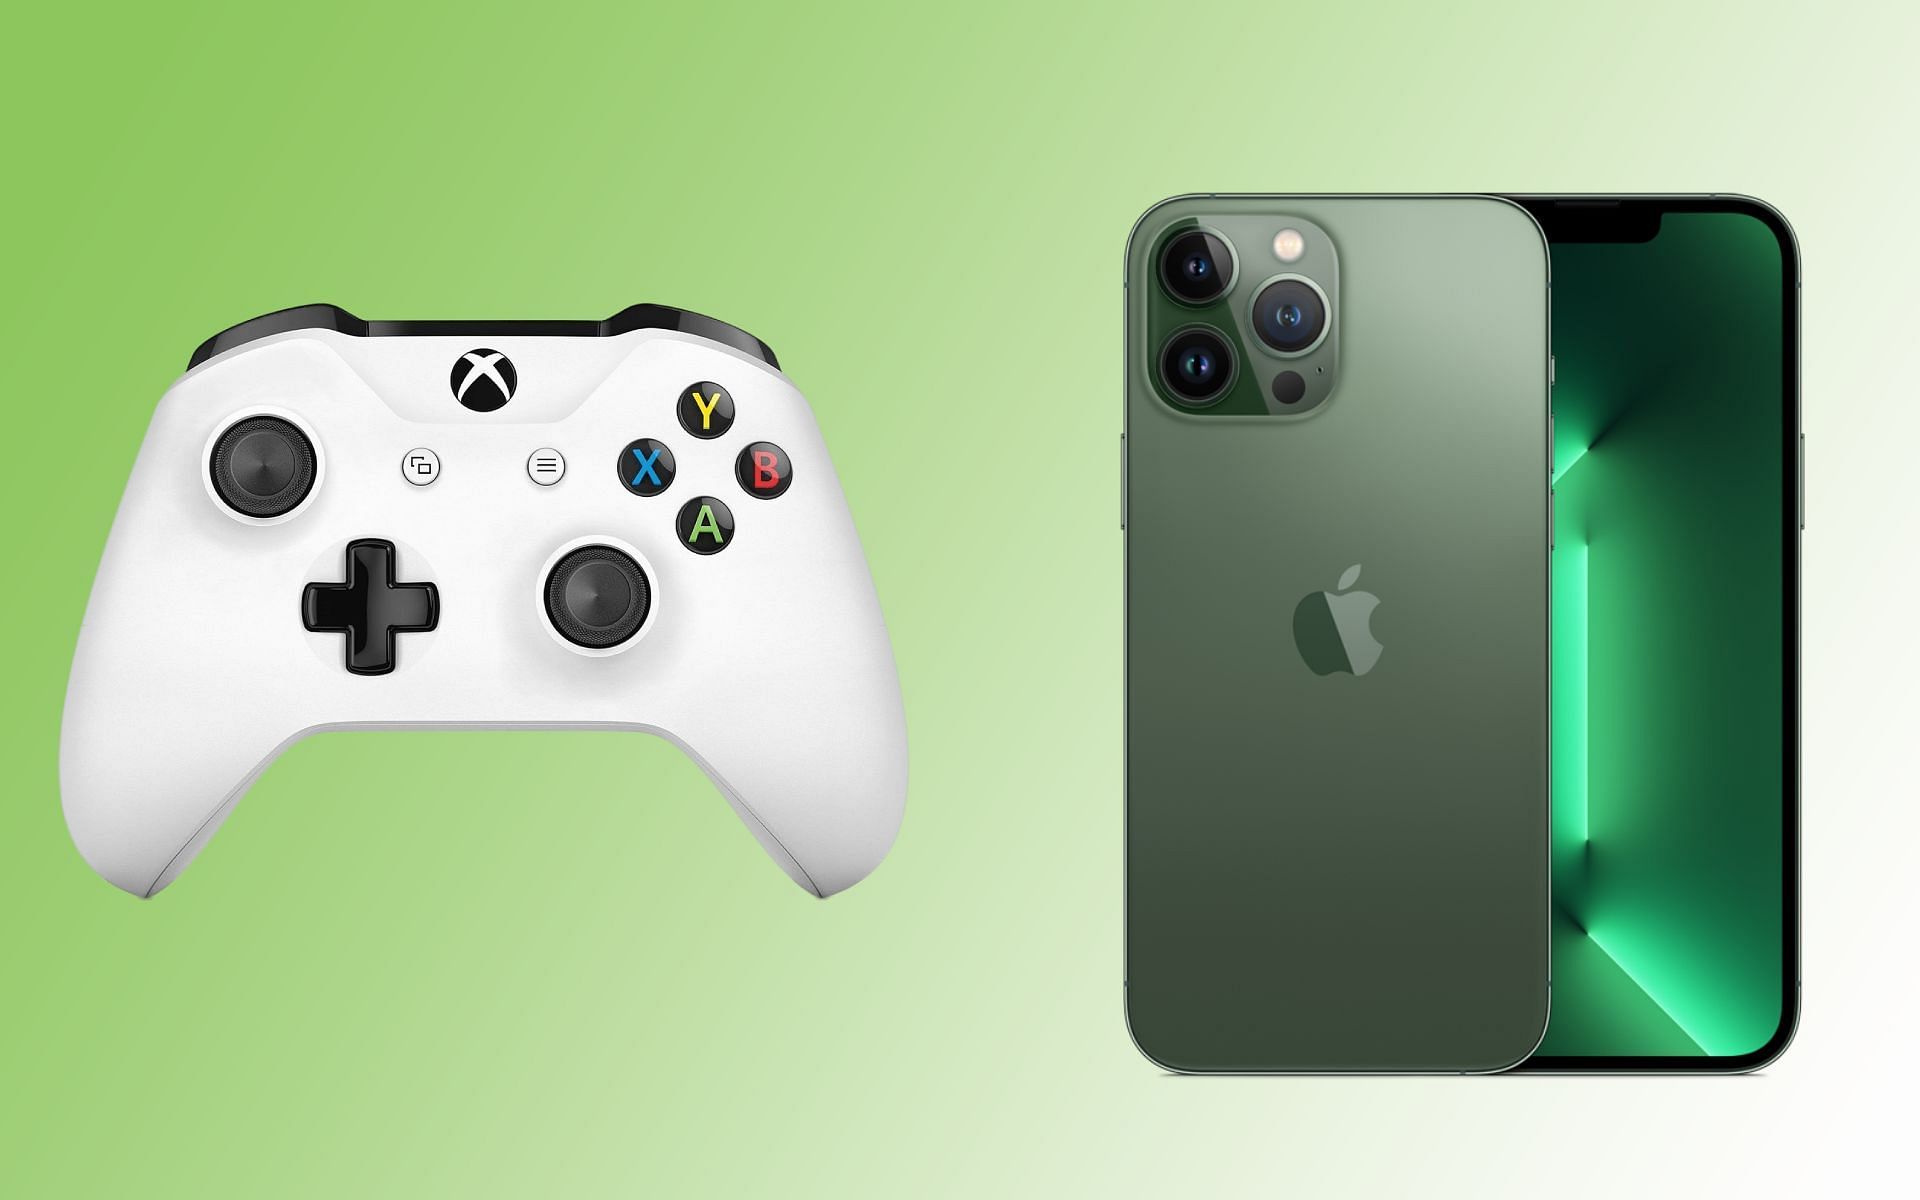 Xbox controller pairing with iPhone (Image via Sportskeeda)